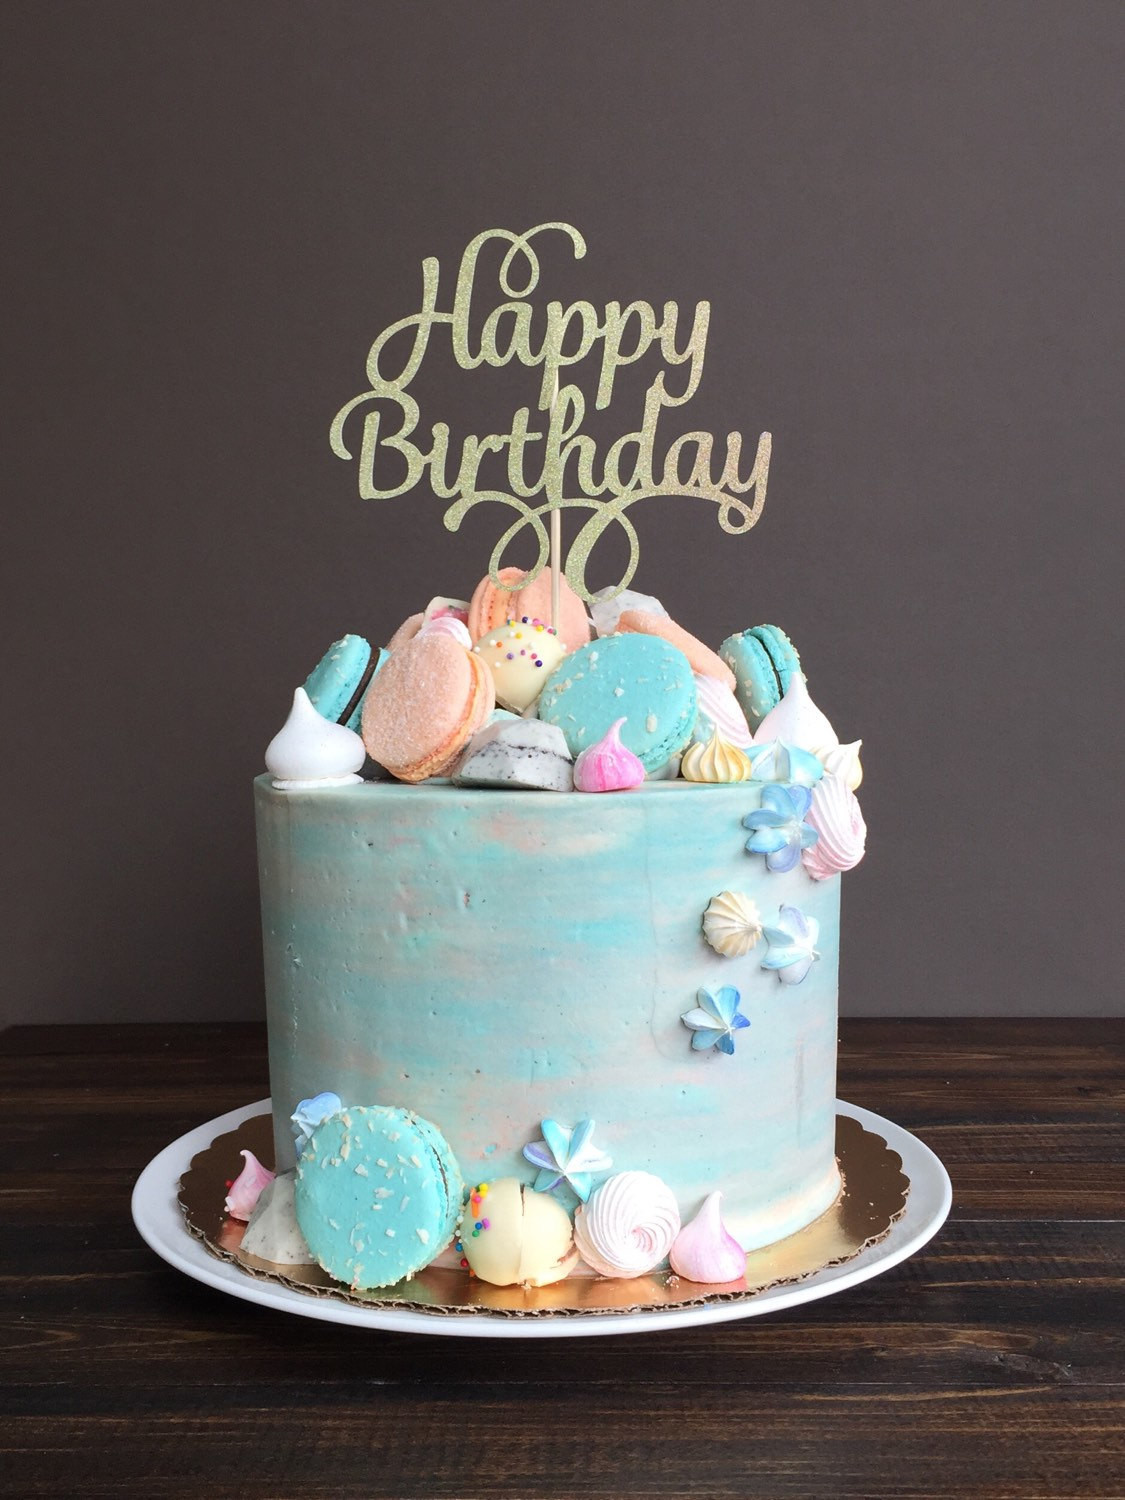 Special Birthday Cakes
 Cake topper Happy Birthday cake topper birthday cake